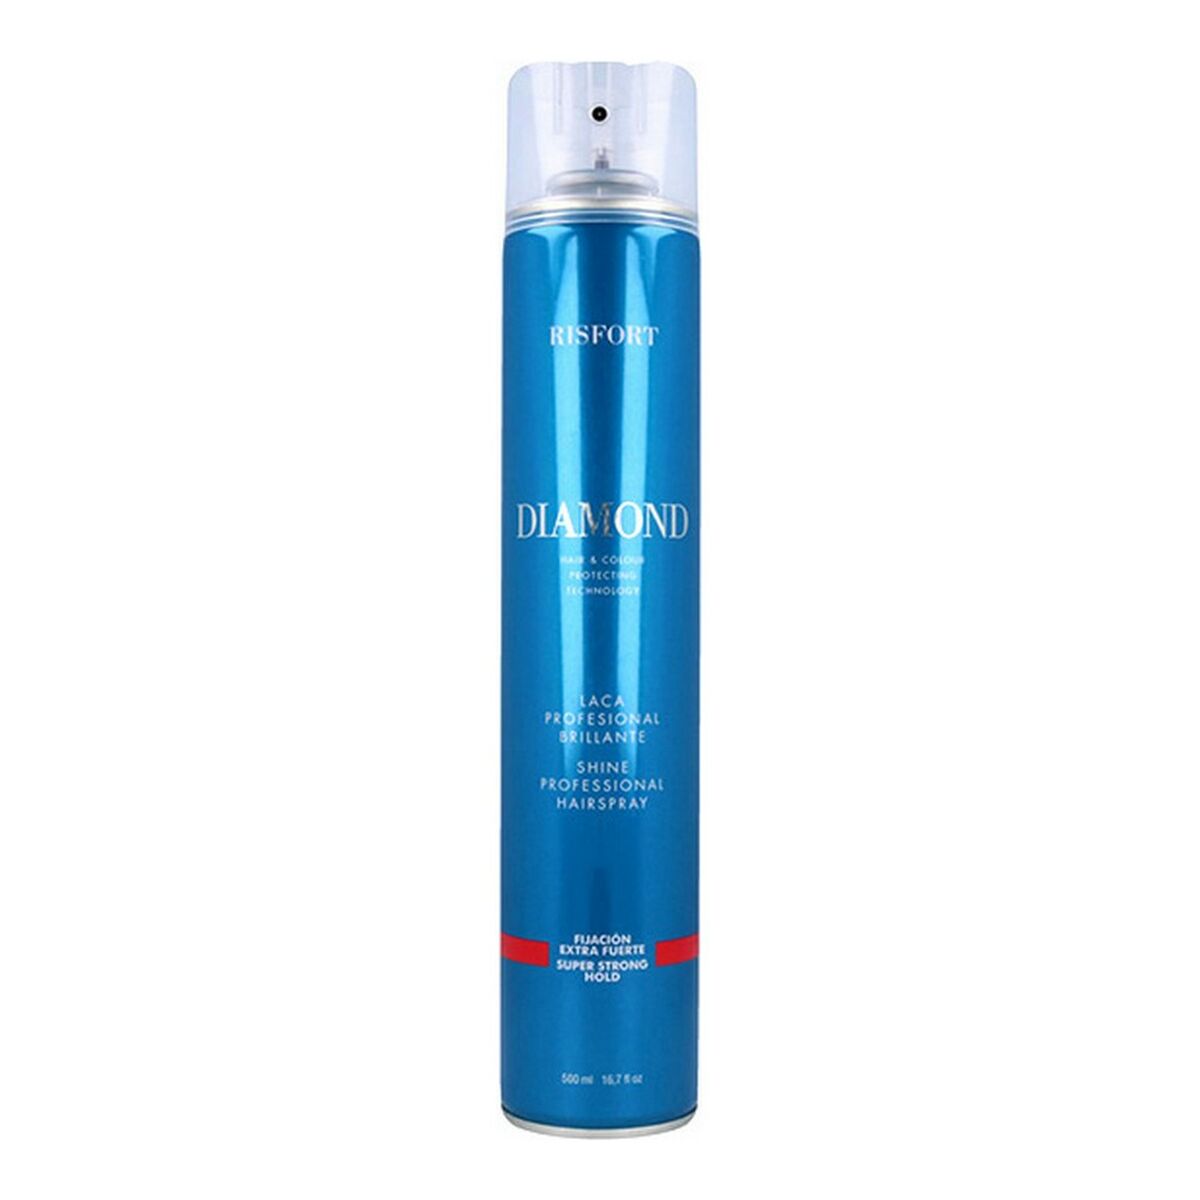 Extra Firm Hold Hairspray Diamond Risfort 69888 (500 ml)-0